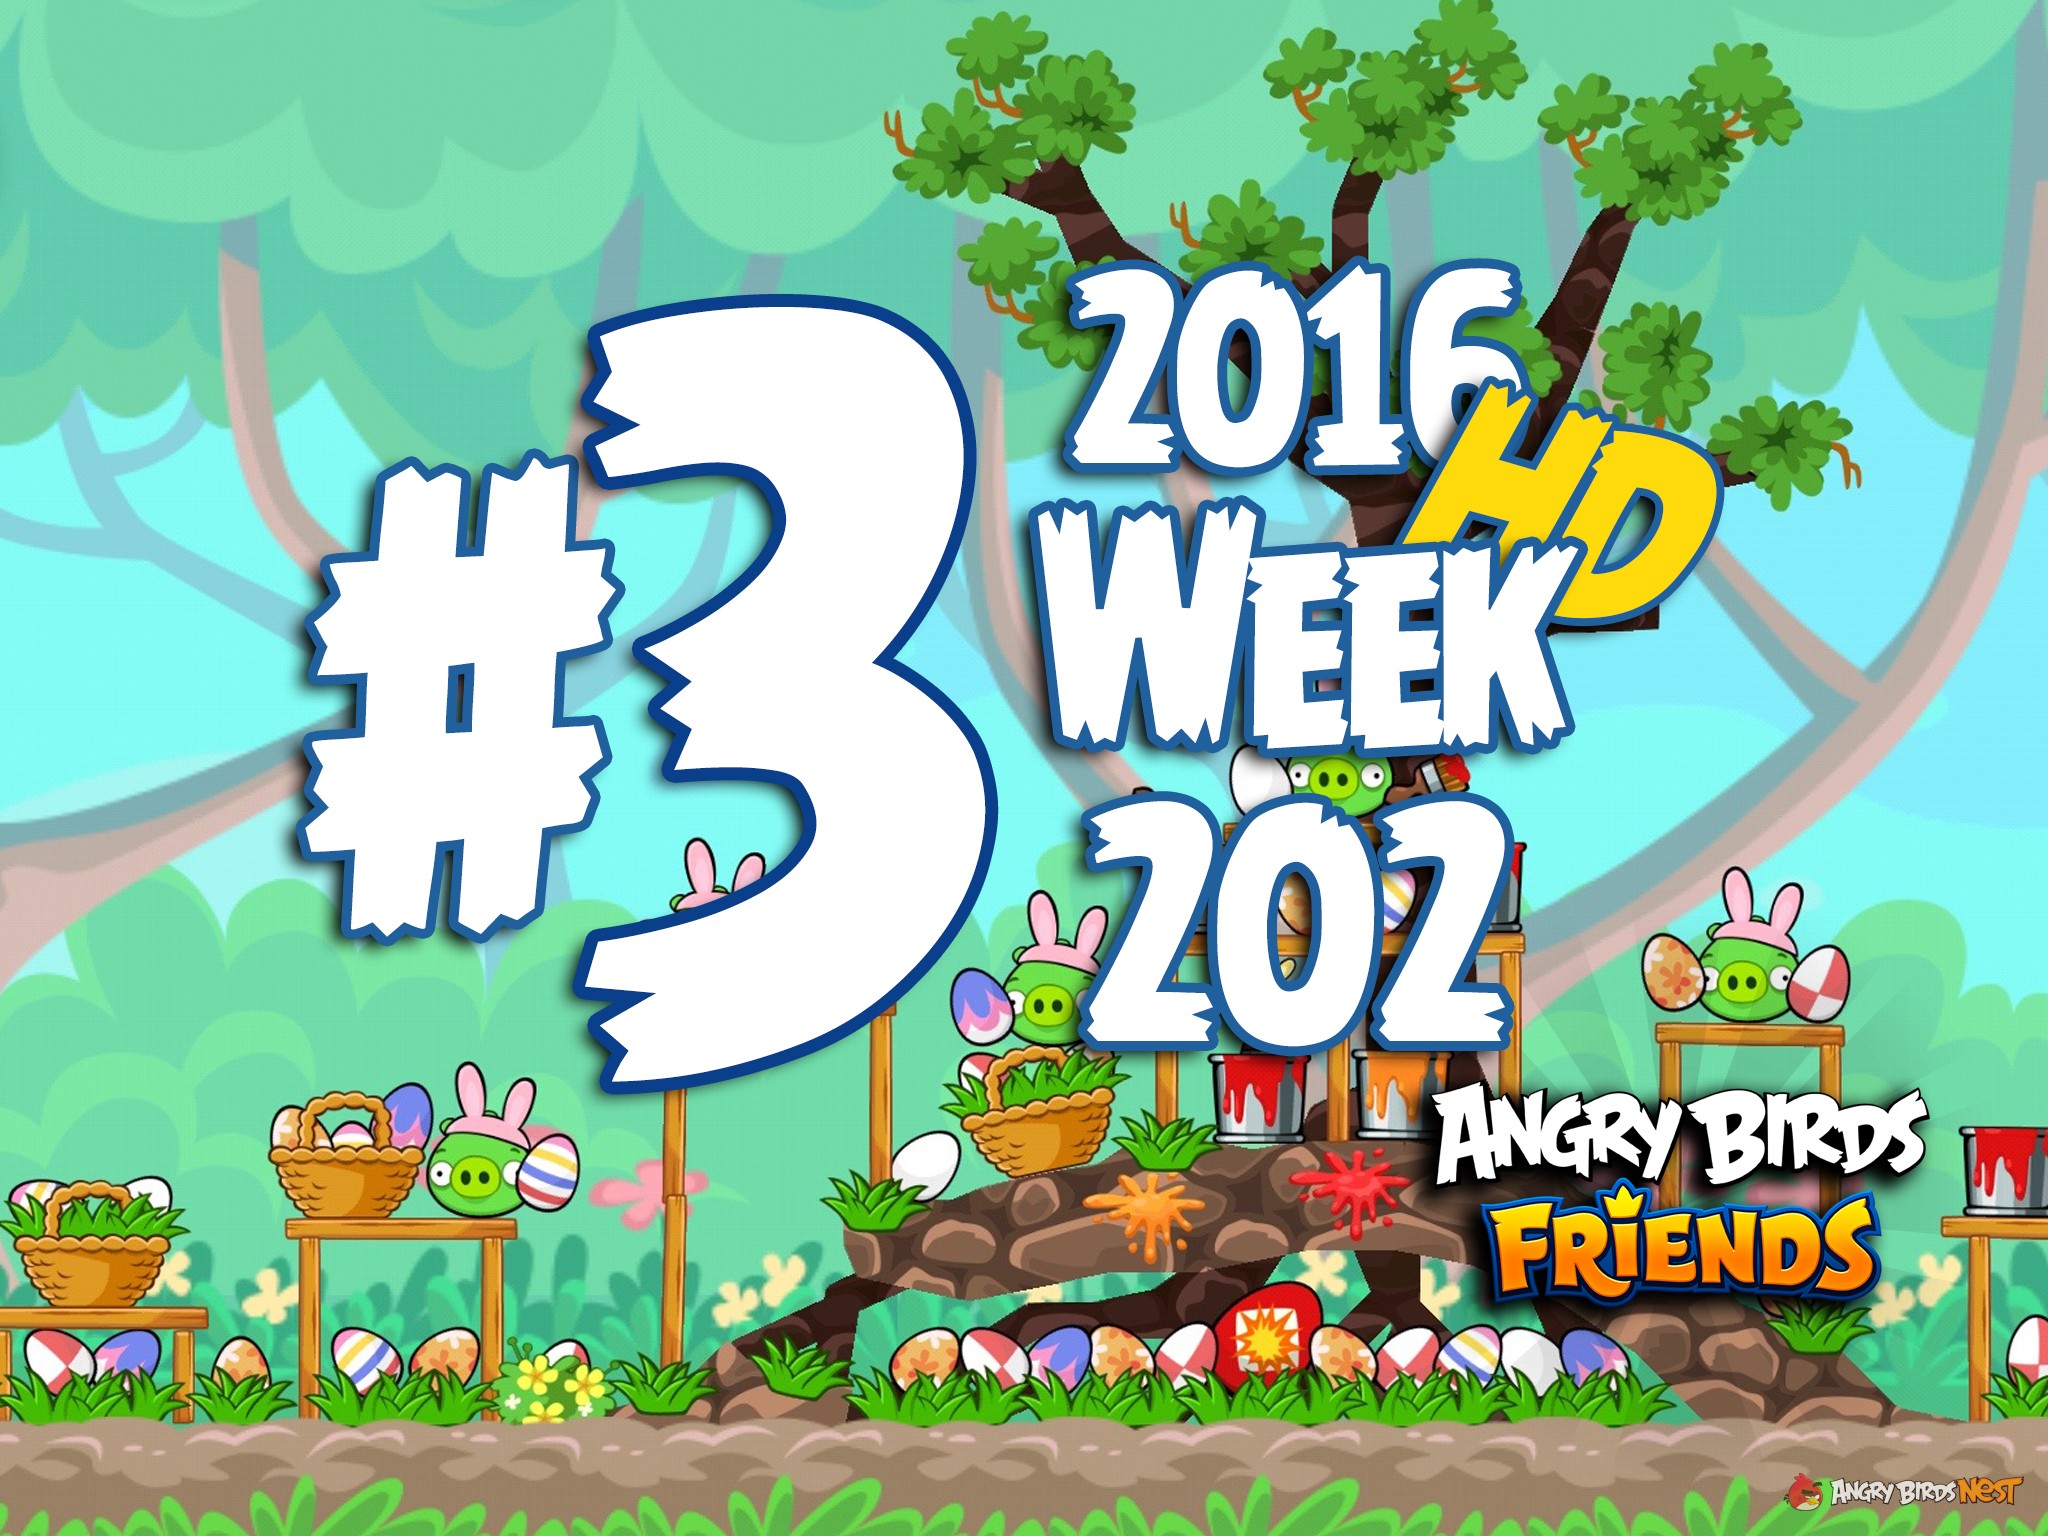 Angry Birds Friends Tournament Level 3 Week 202 Walkthrough | March 24th 2016